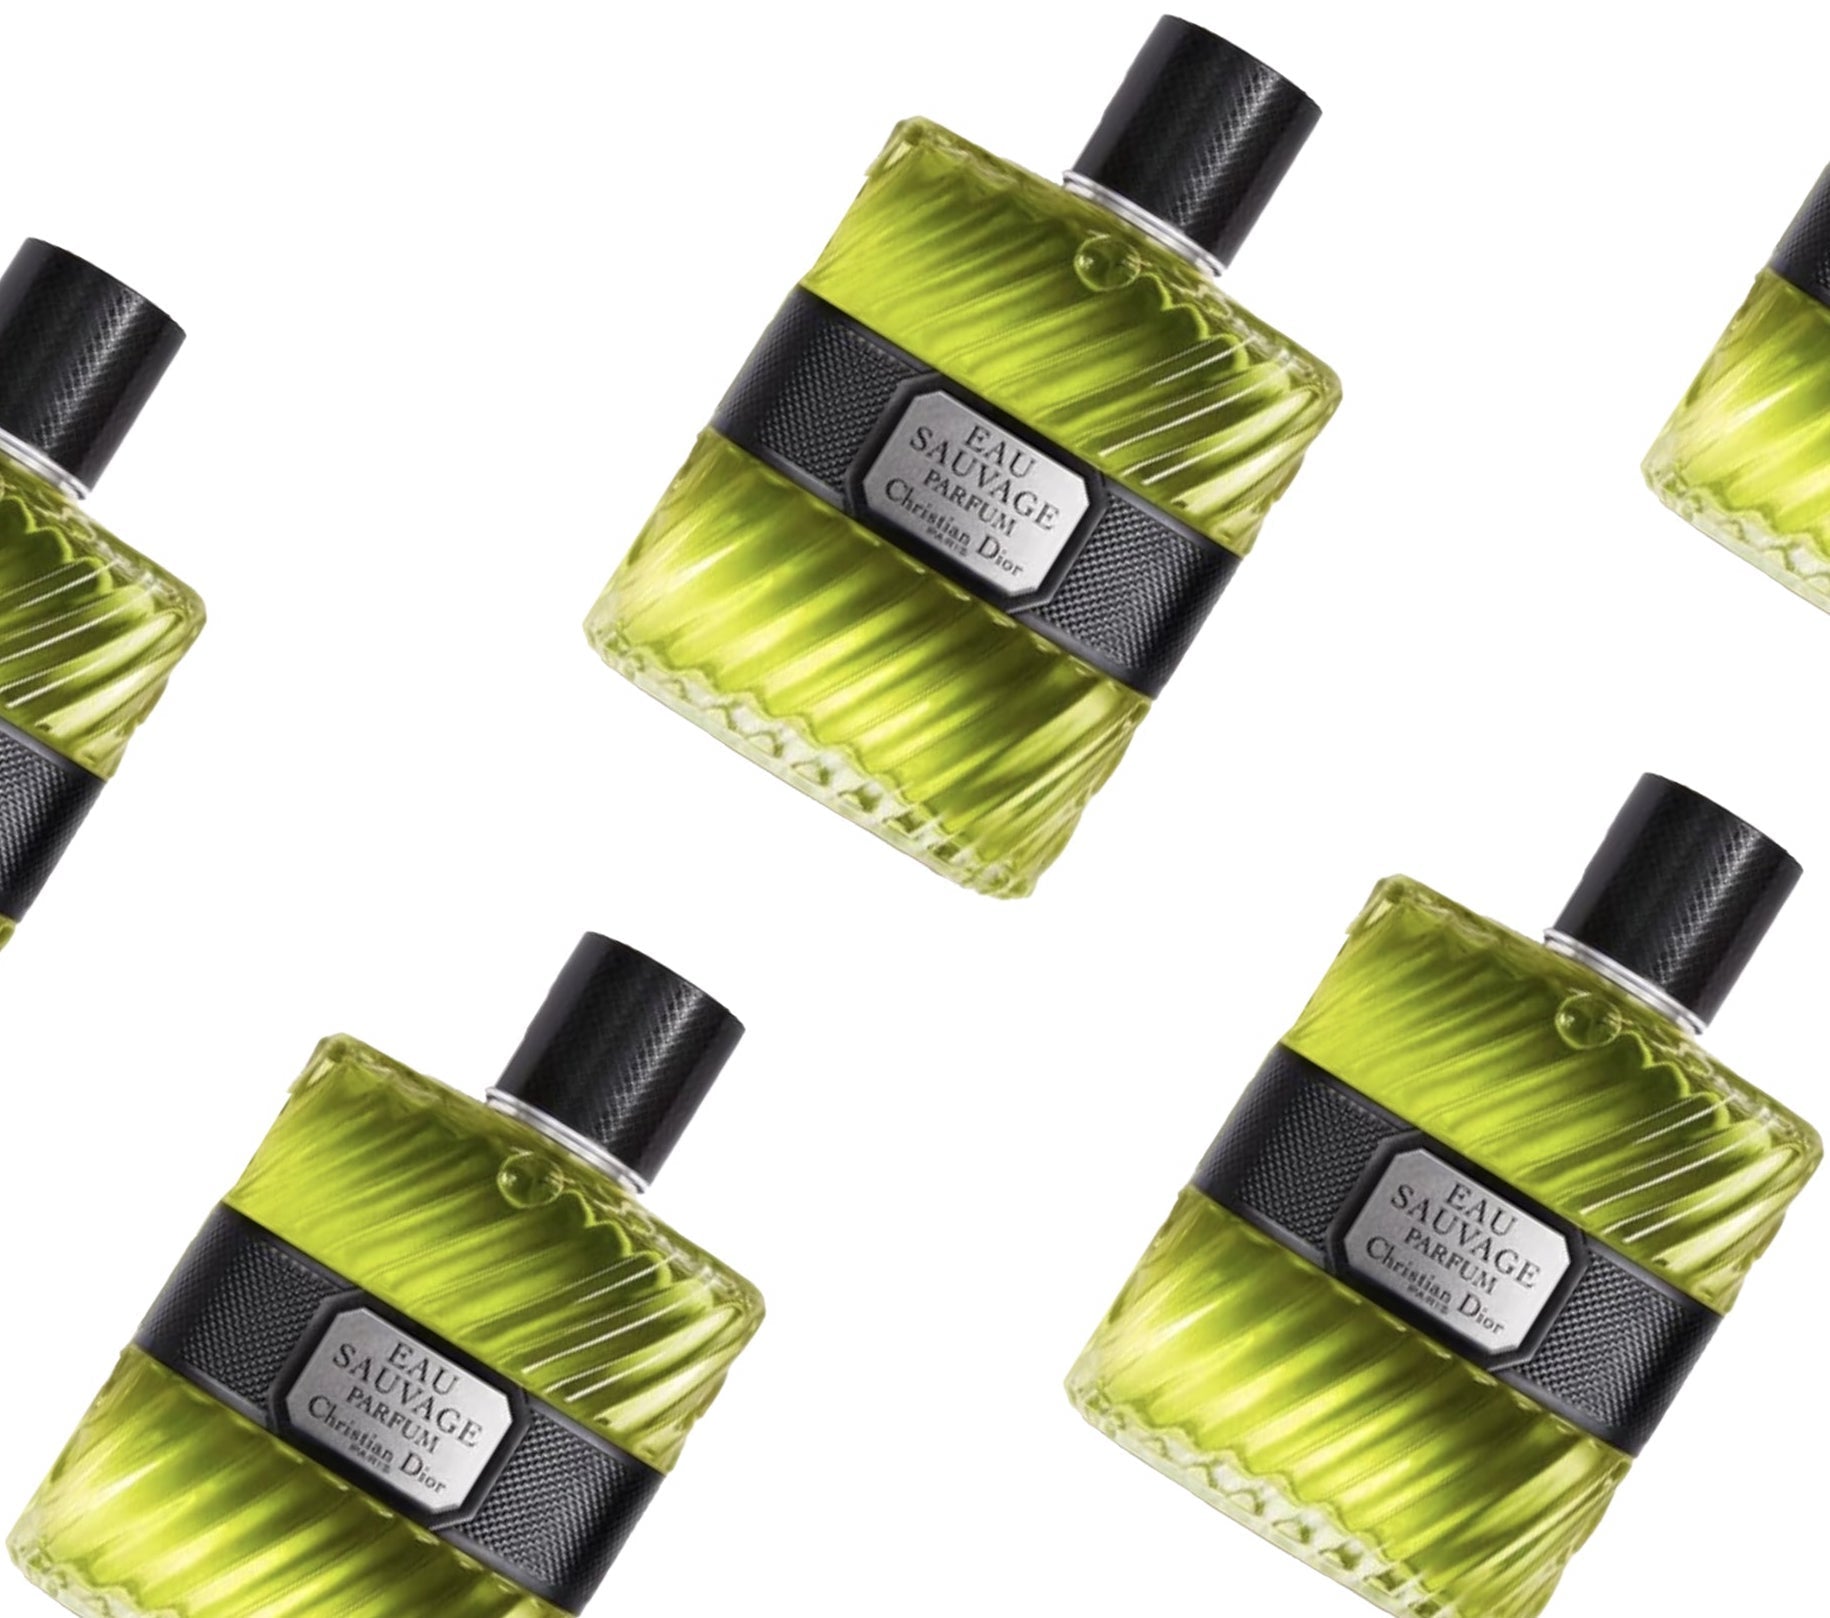 Dior Eau Sauvage Deodorant Stick | My Perfume Shop Australia